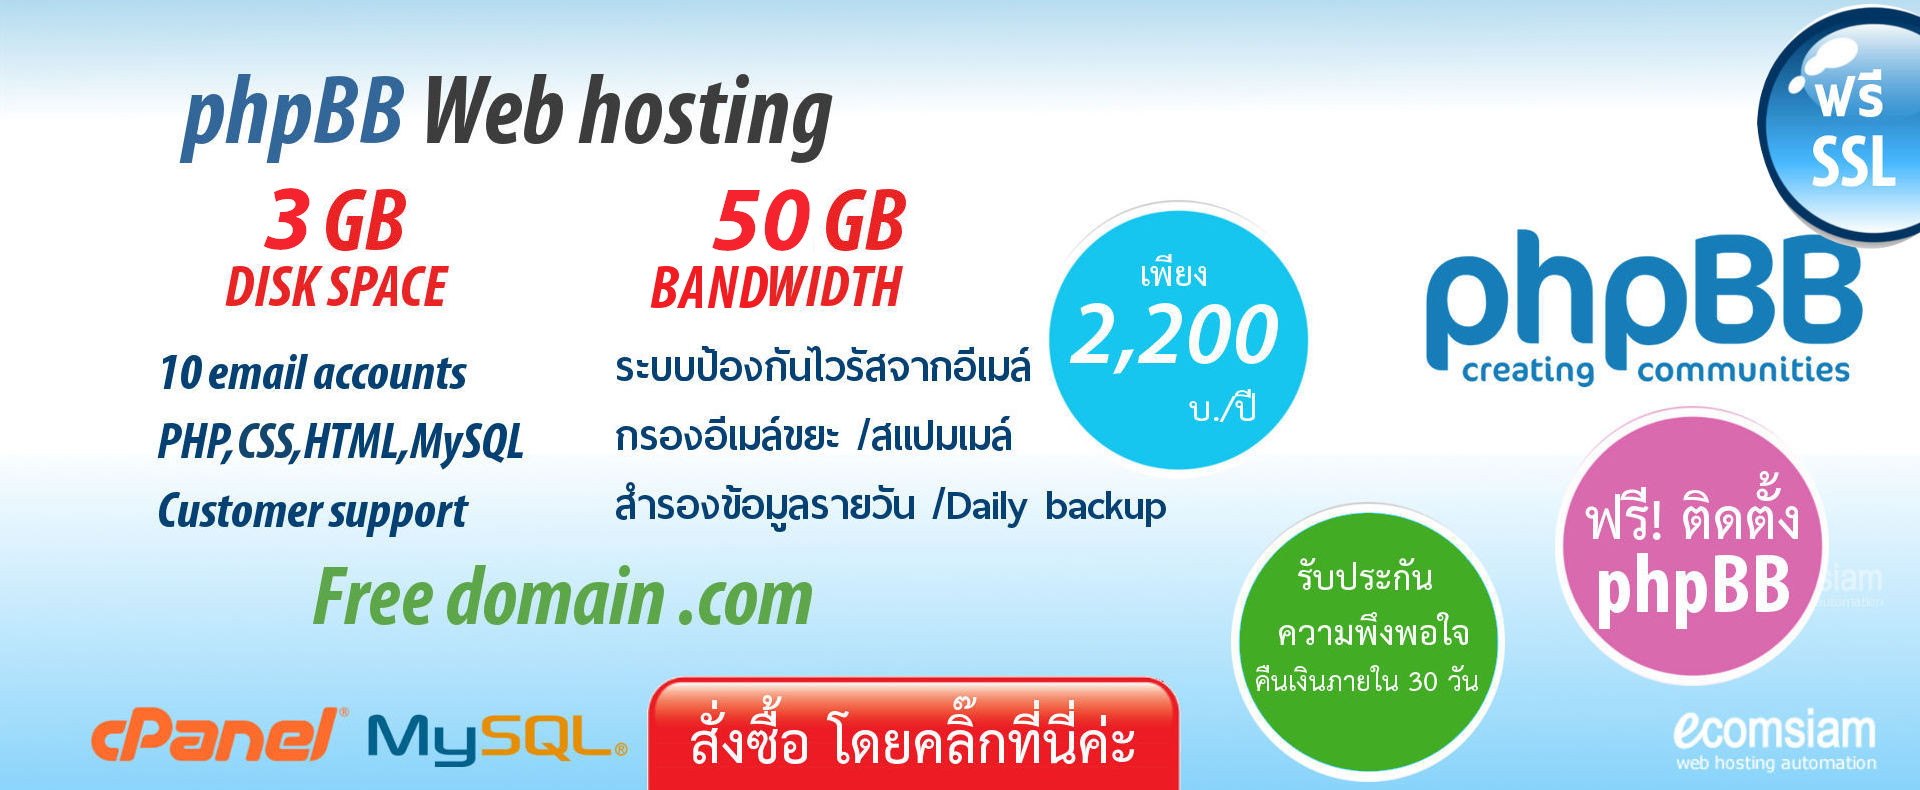 phpBB web hosting เว็บโฮสติ้งไทย ราคาเบาๆ เริ่มต้นเพียง 2200 บาทต่อปี ฟรีโดเมน ฟรี SSL สำหรับ web hosting thailand